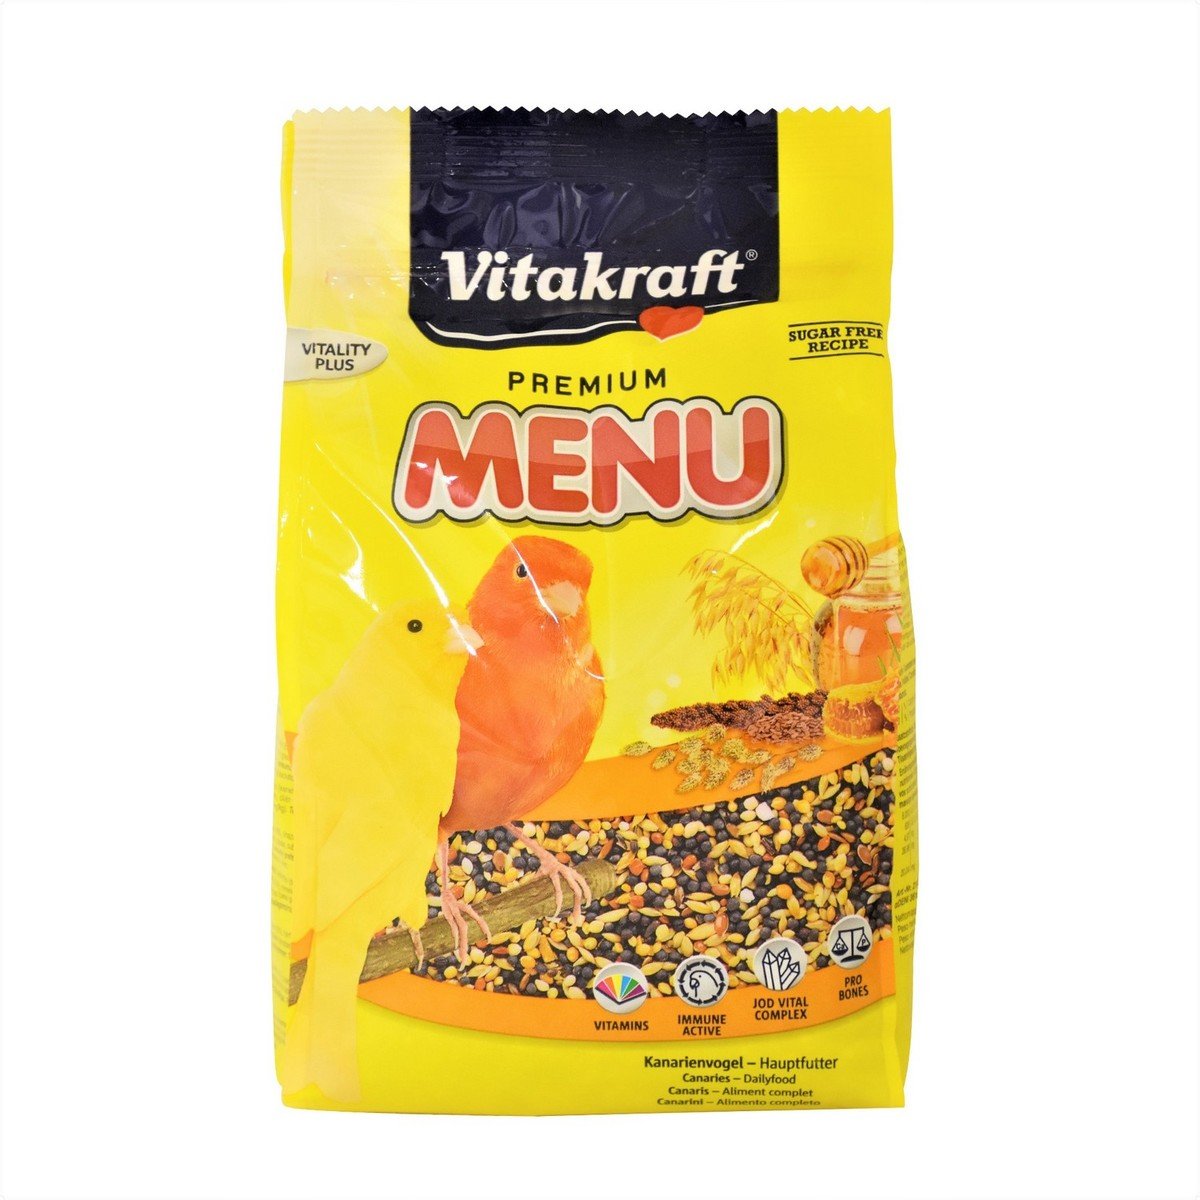 Vitakraft Premium Menu Vitality Plus Canaries Daily Food 500g